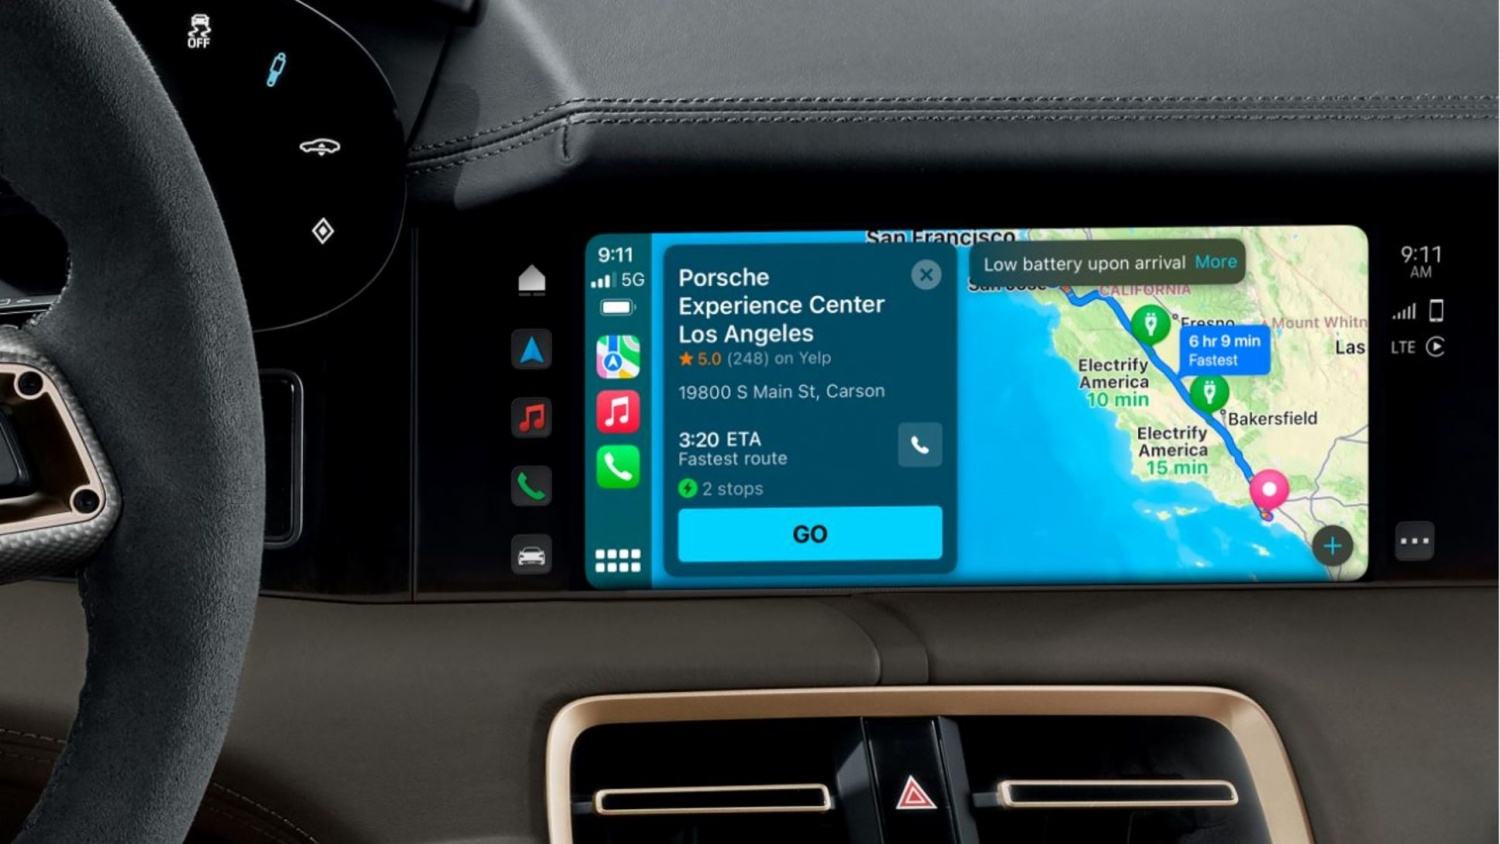 Porsche Apple Maps EV Routing